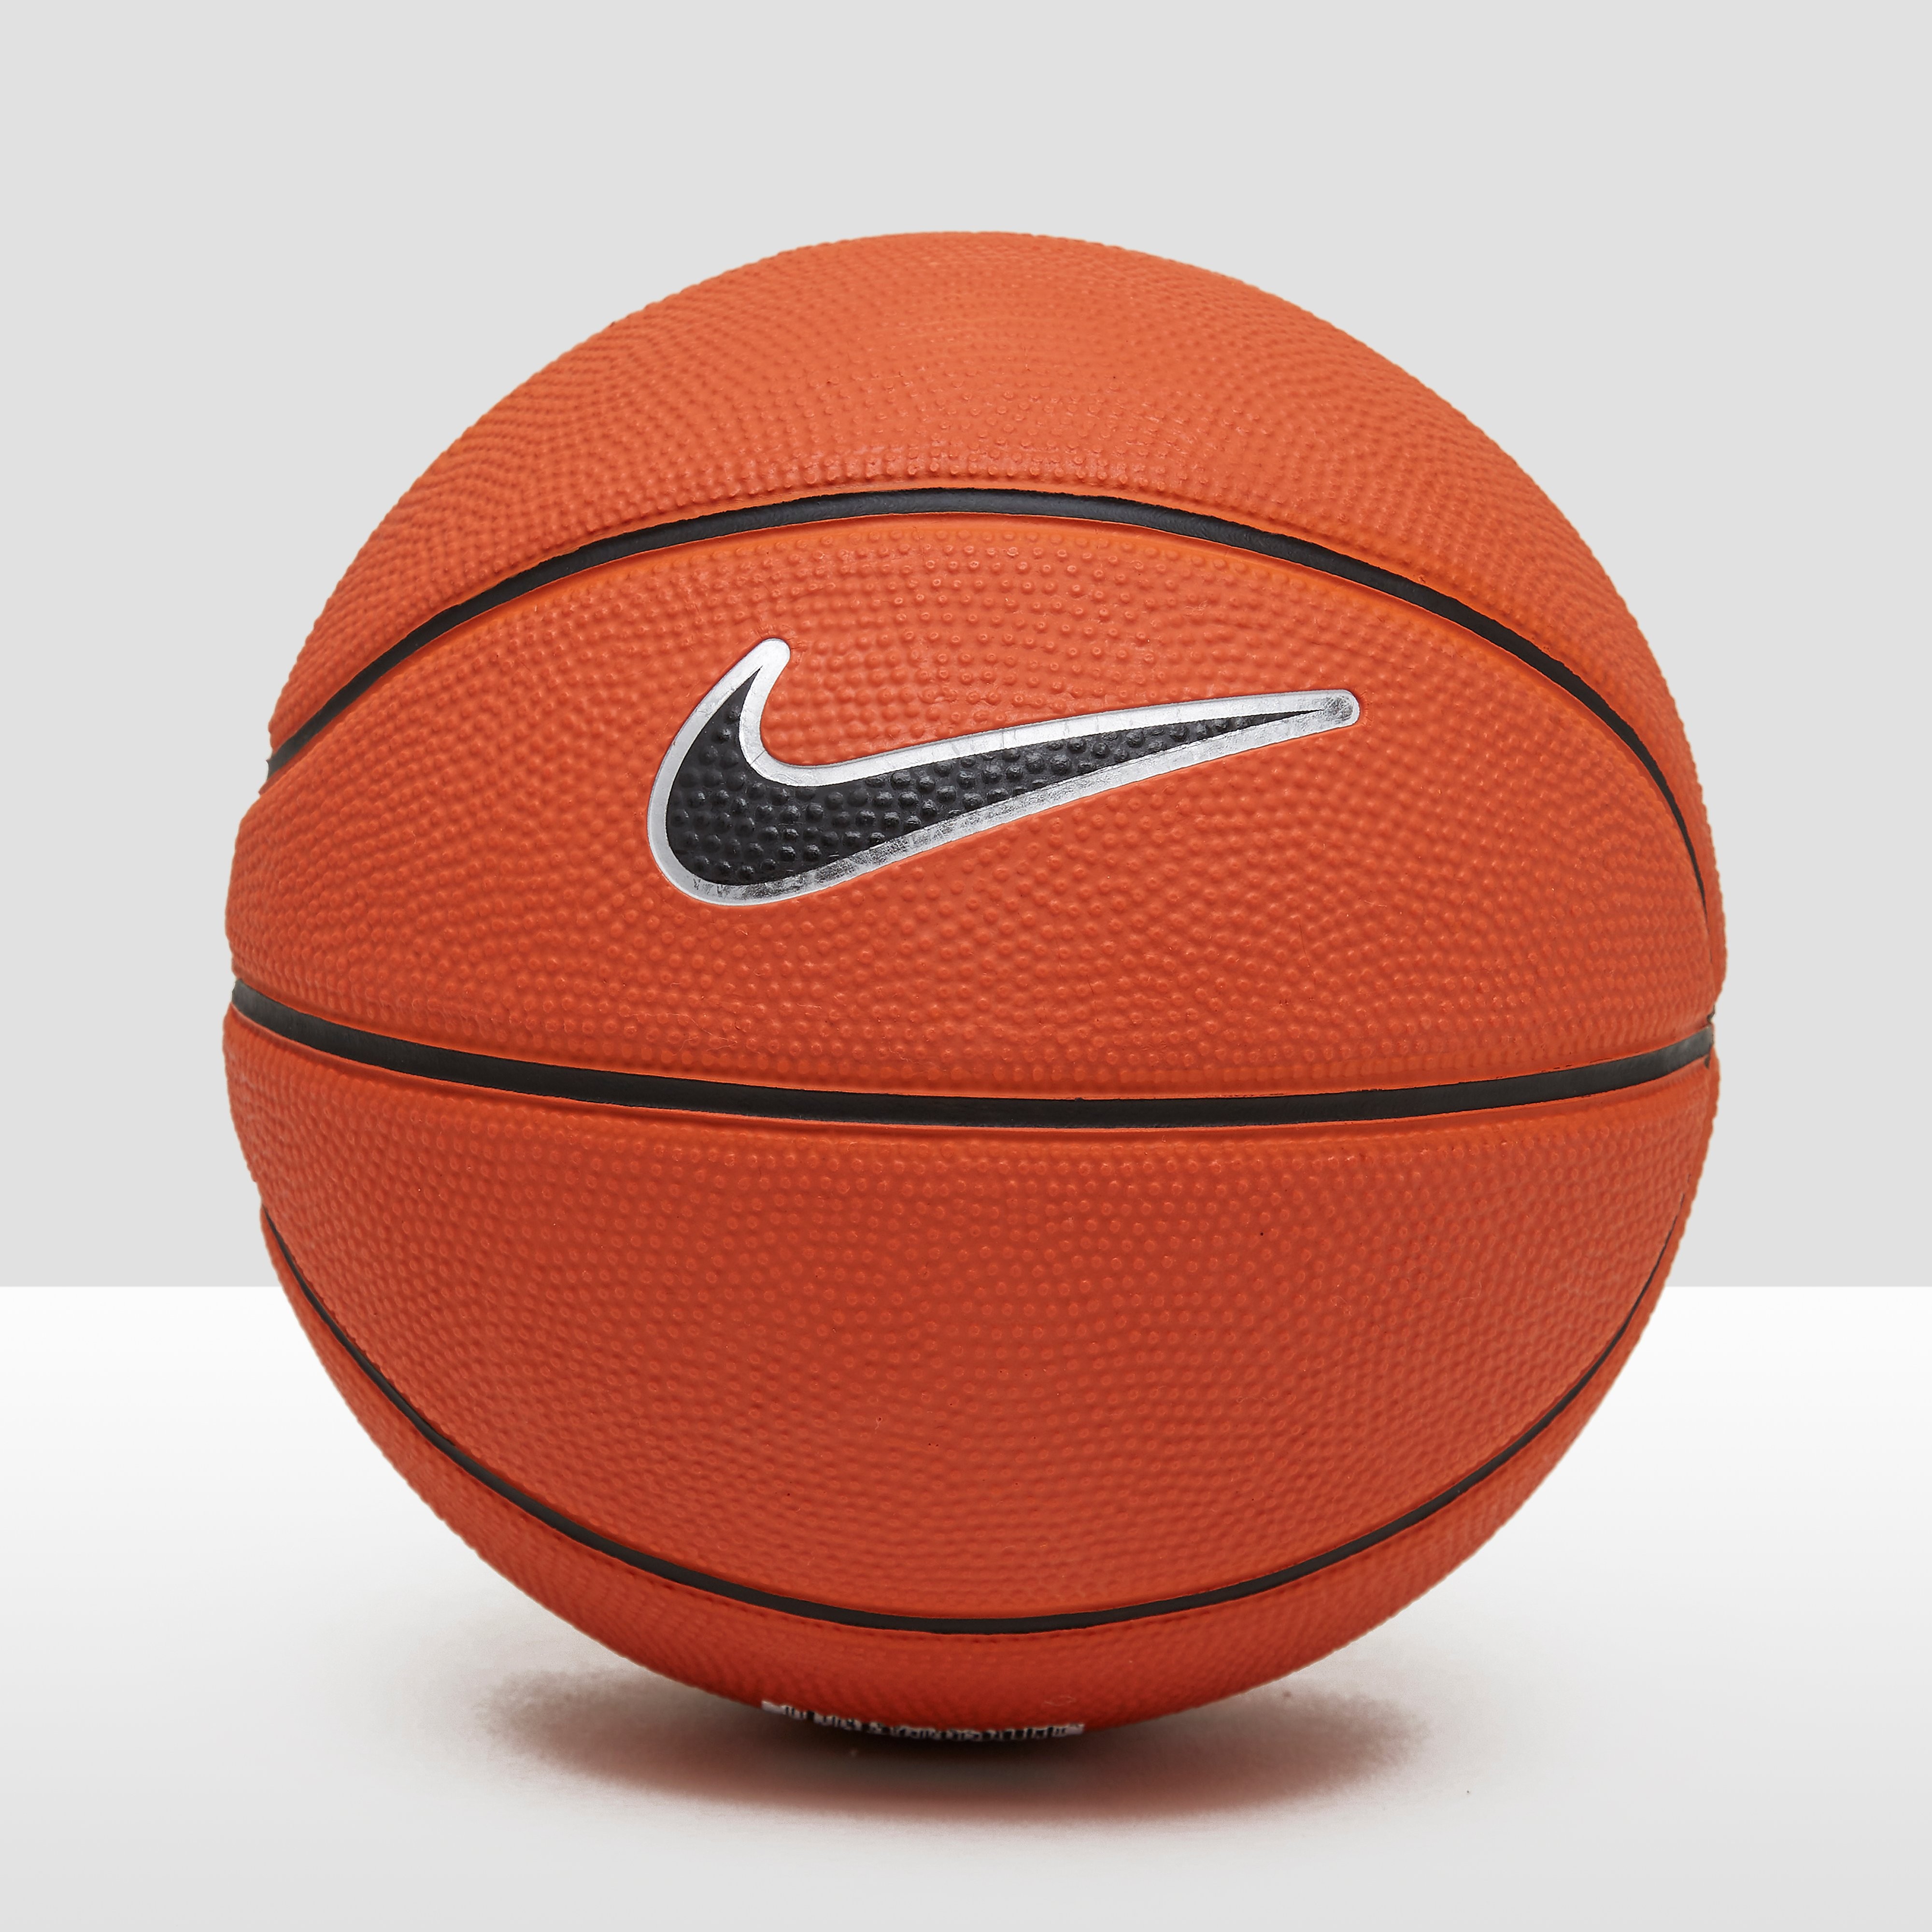 Nike skills rubber basketbal oranje/zwart